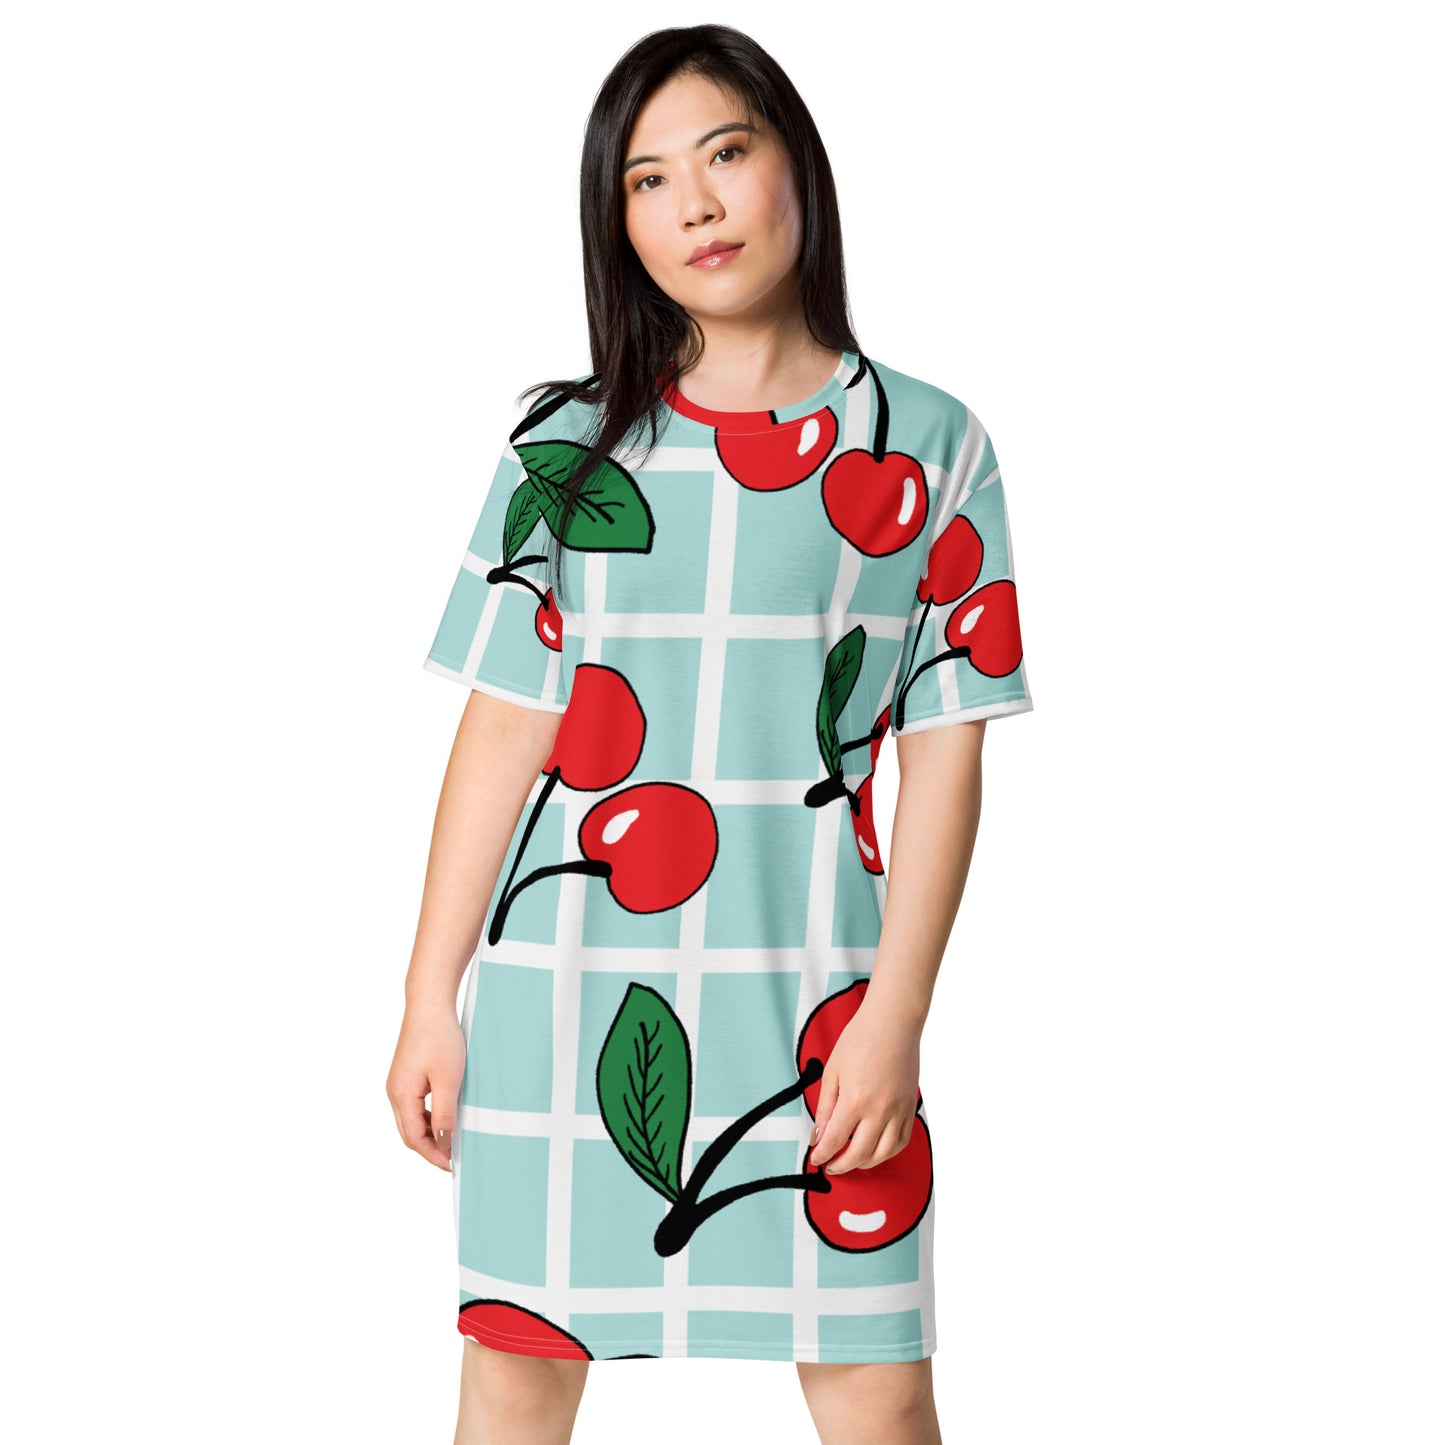 T-shirt Dress: Cherries and Tile